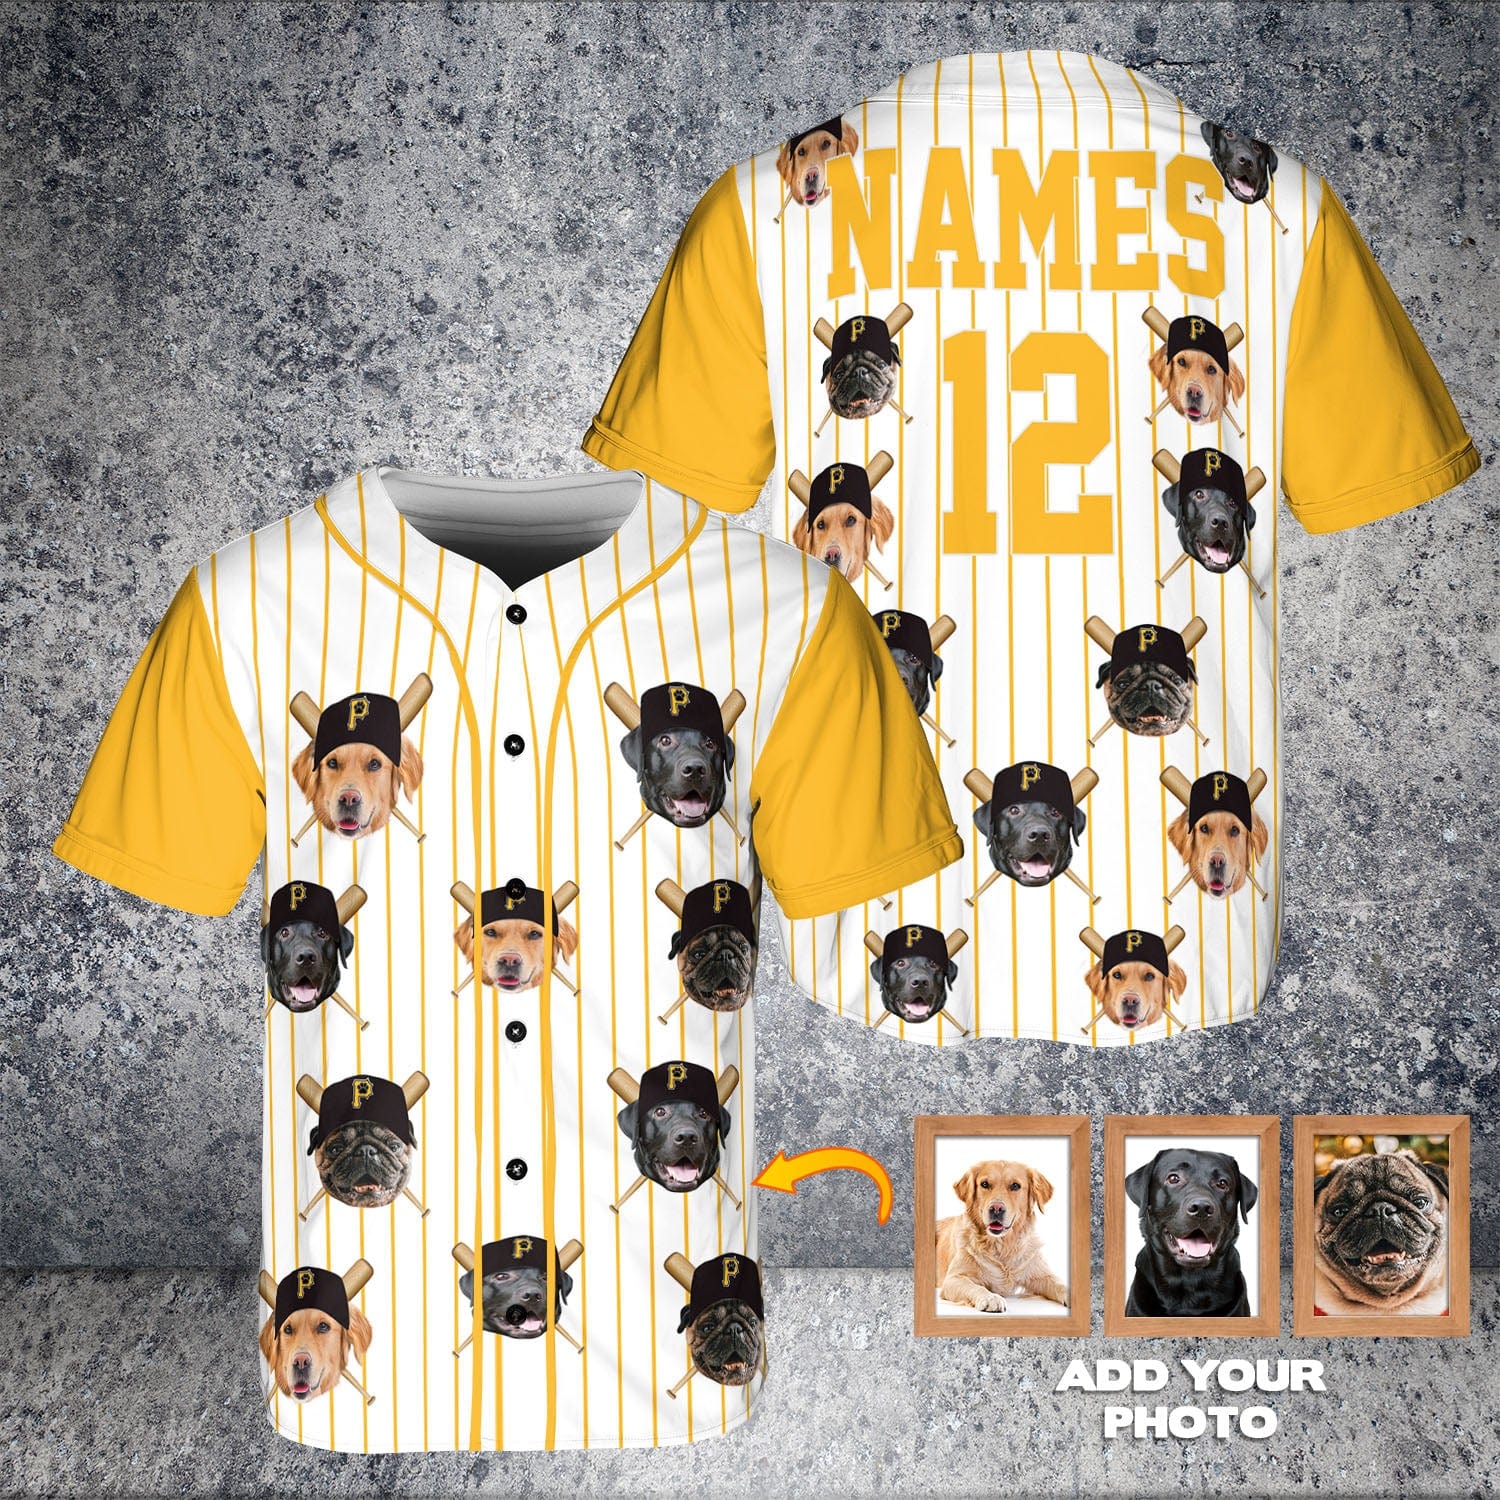 Camiseta de béisbol personalizada de los Pittsburgh Pawrates